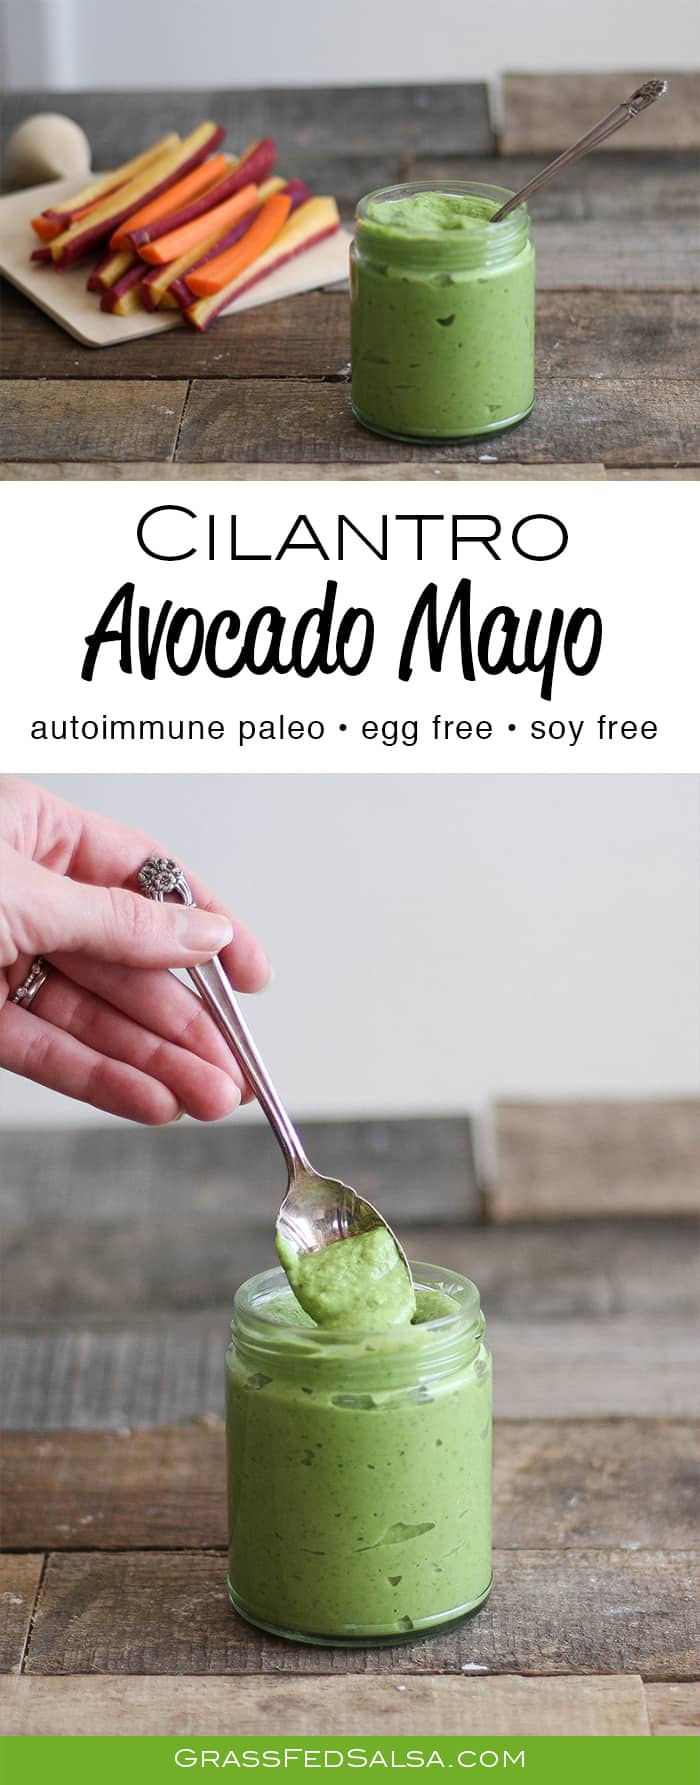 Get the recipe for this egg free, AIP & vegan friendly Cilantro Avocado Mayo.